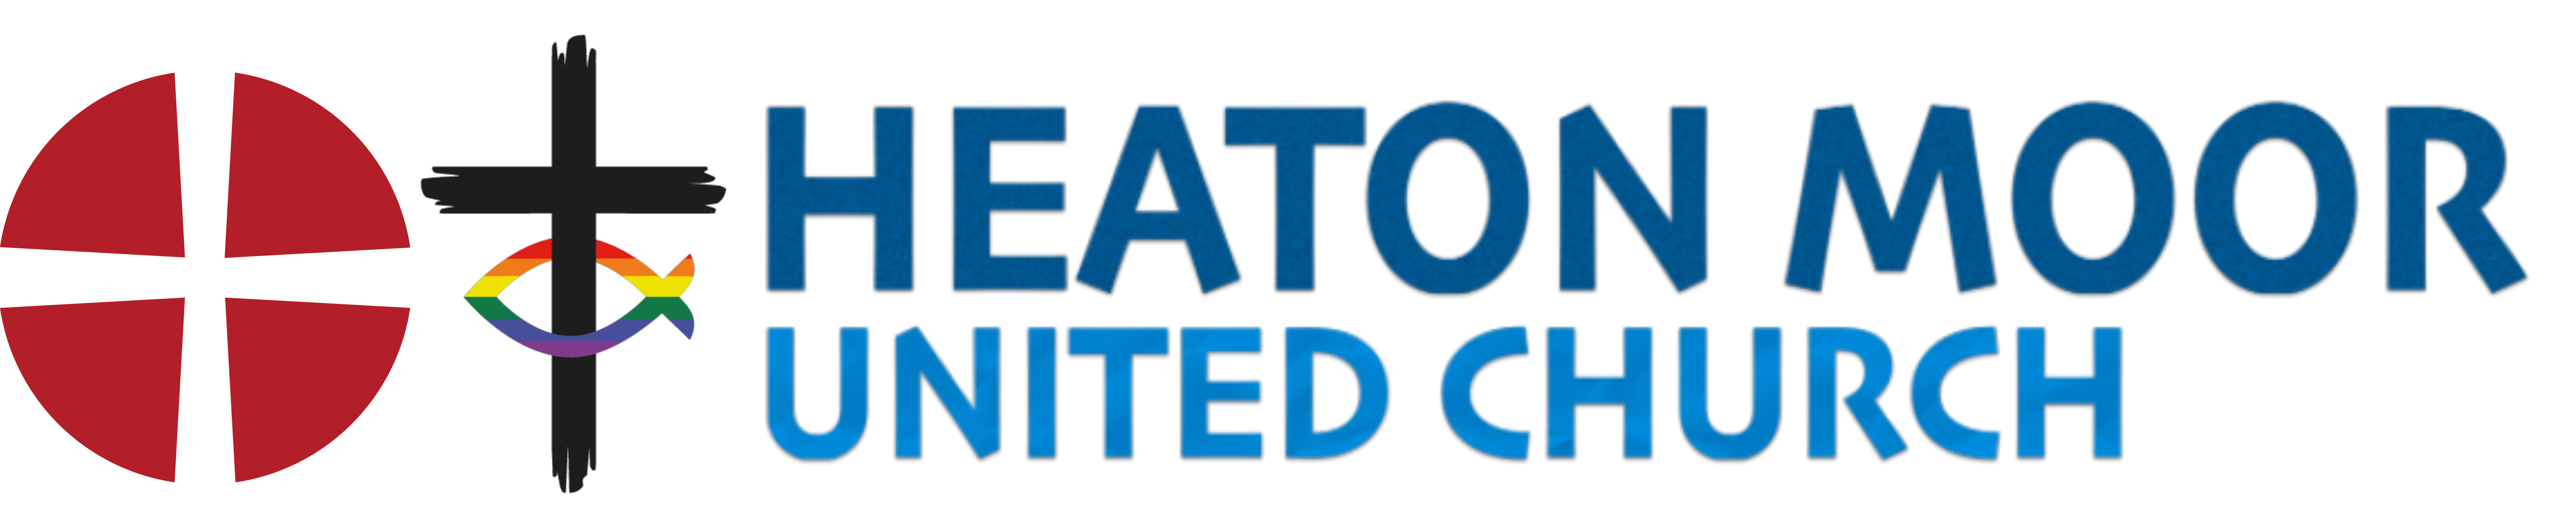 Heaton Moor United Church Logo Link